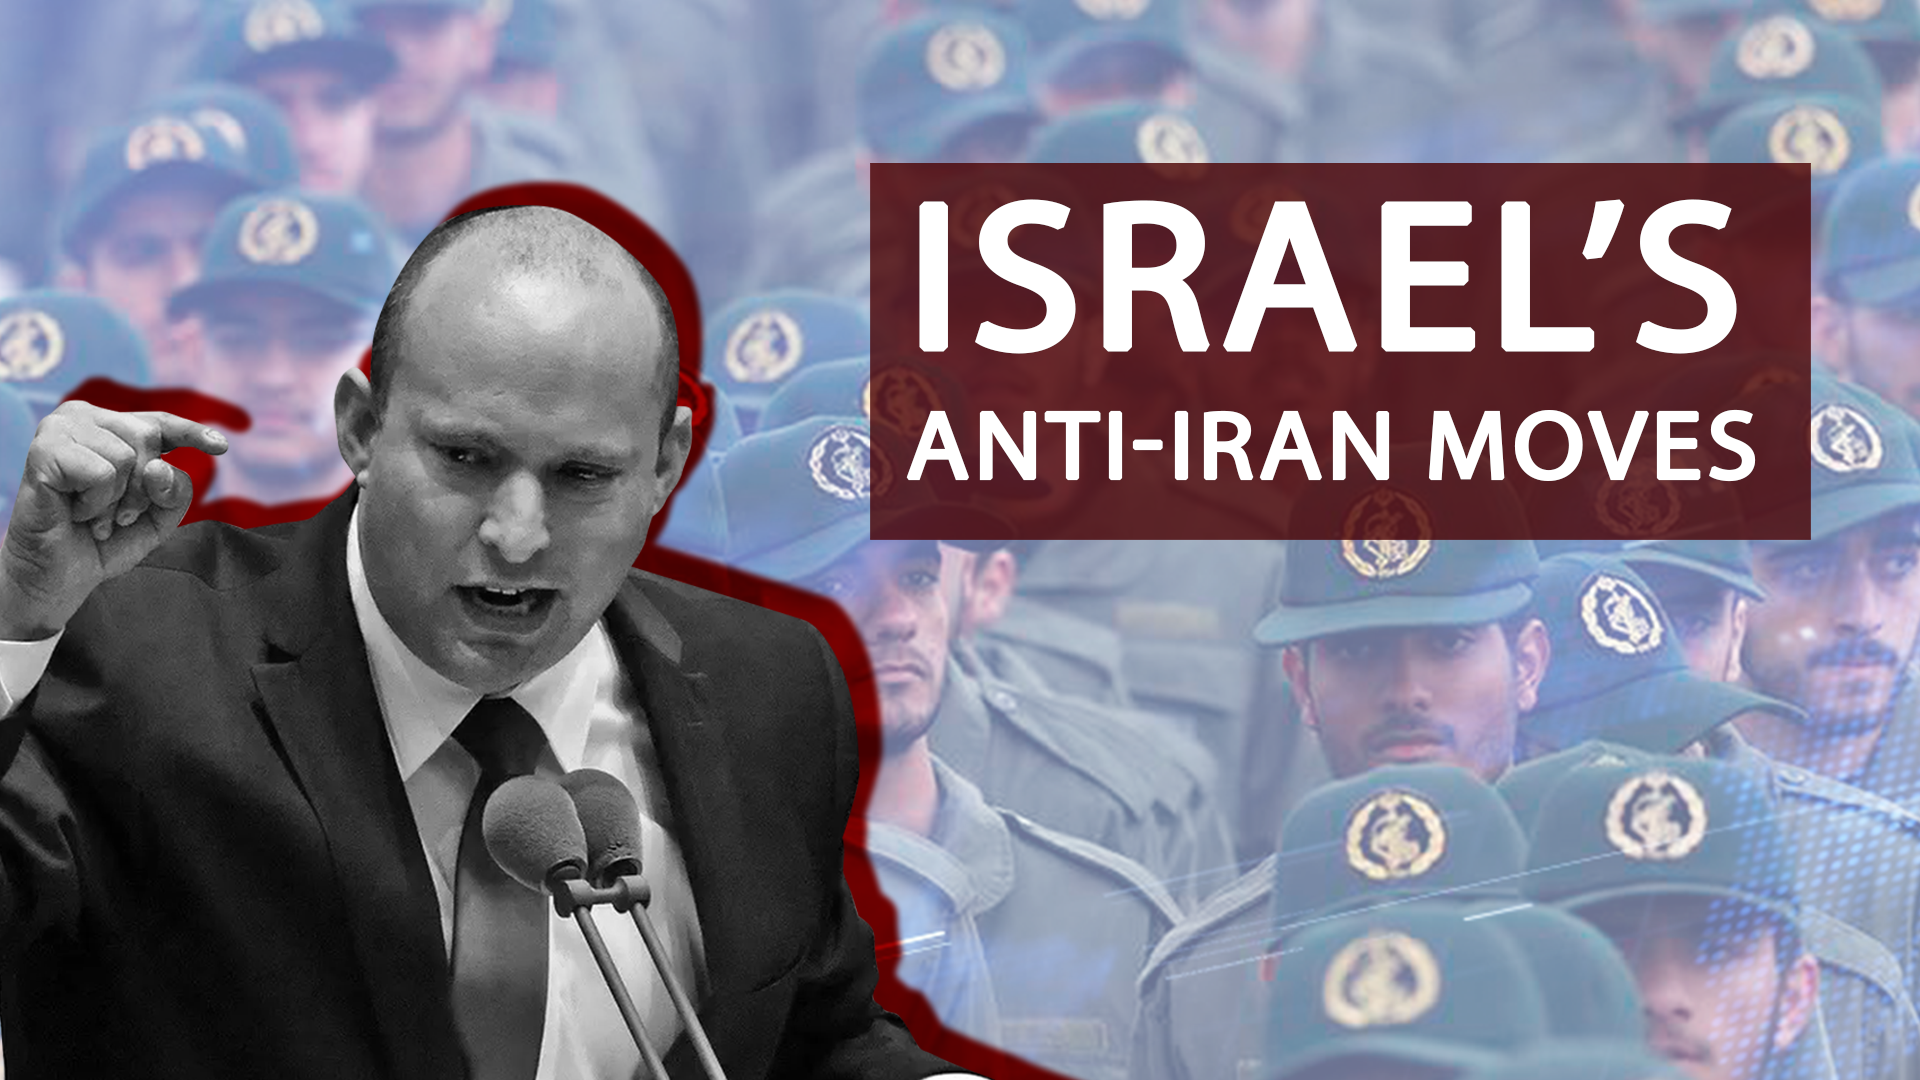 Israel’s anti-Iran moves